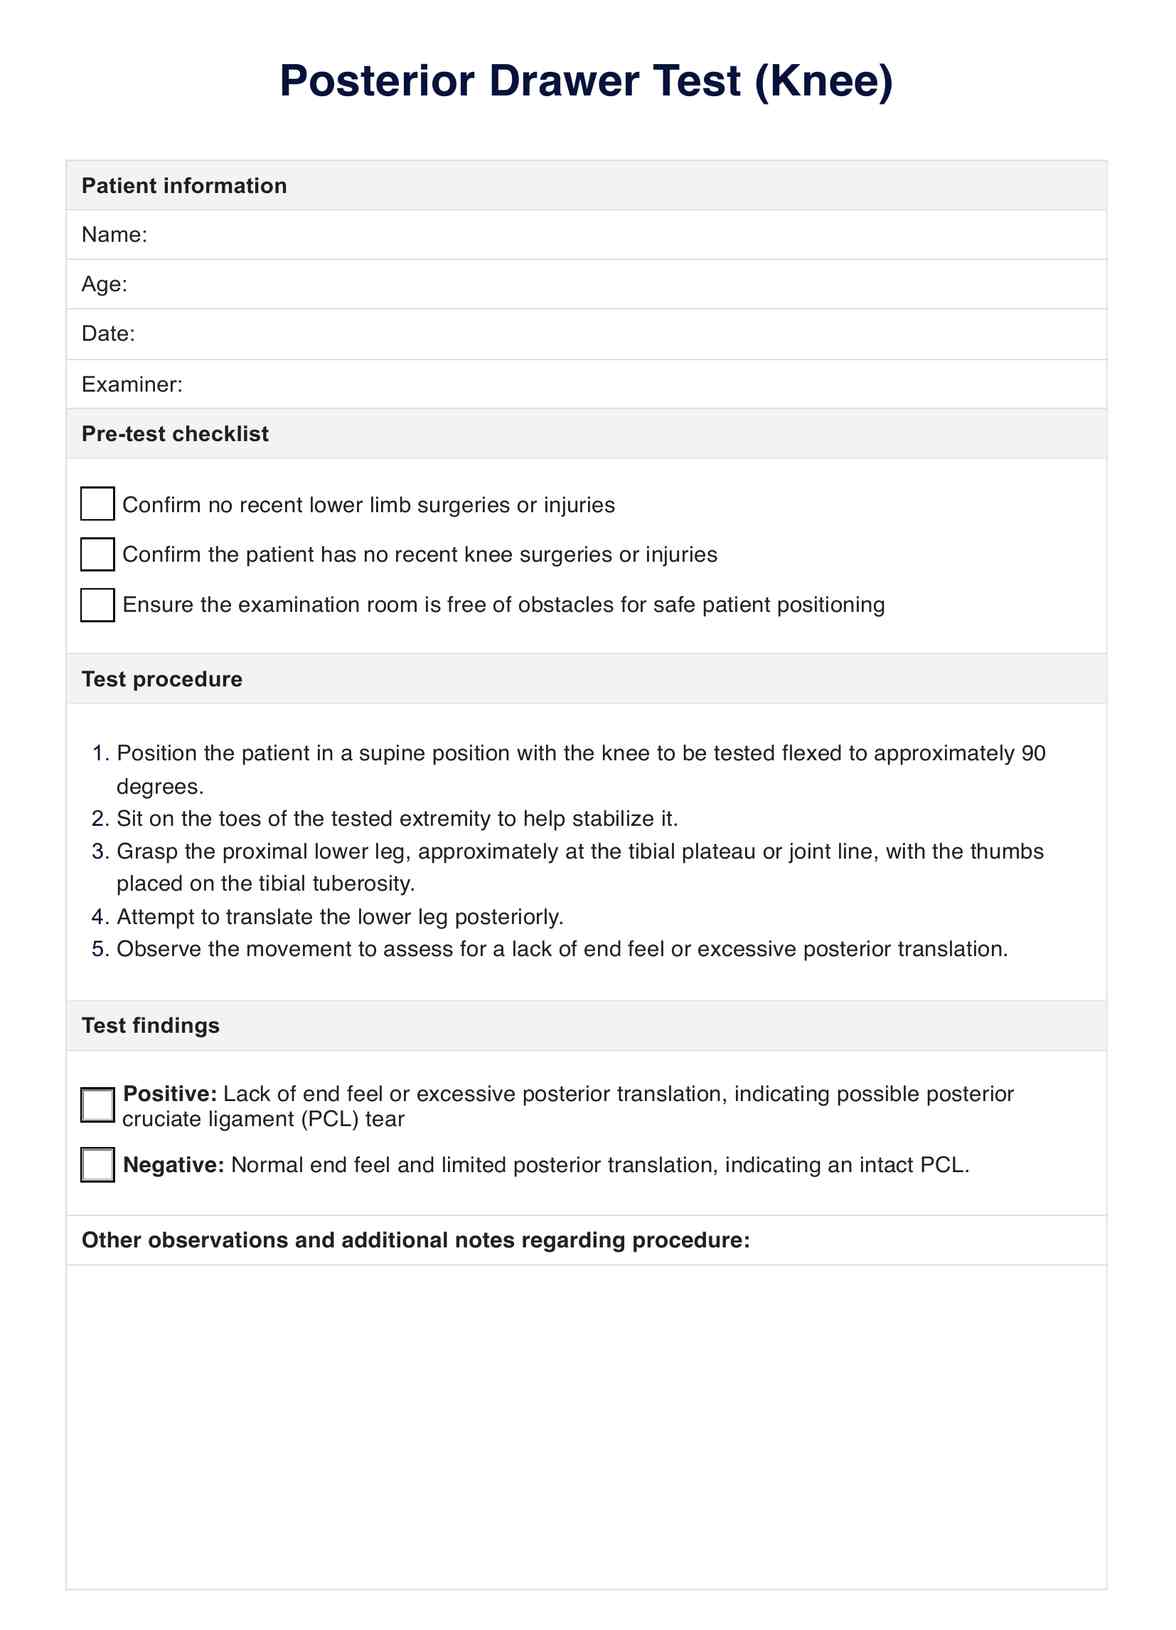 Posterior Drawer Test (Knee) PDF Example